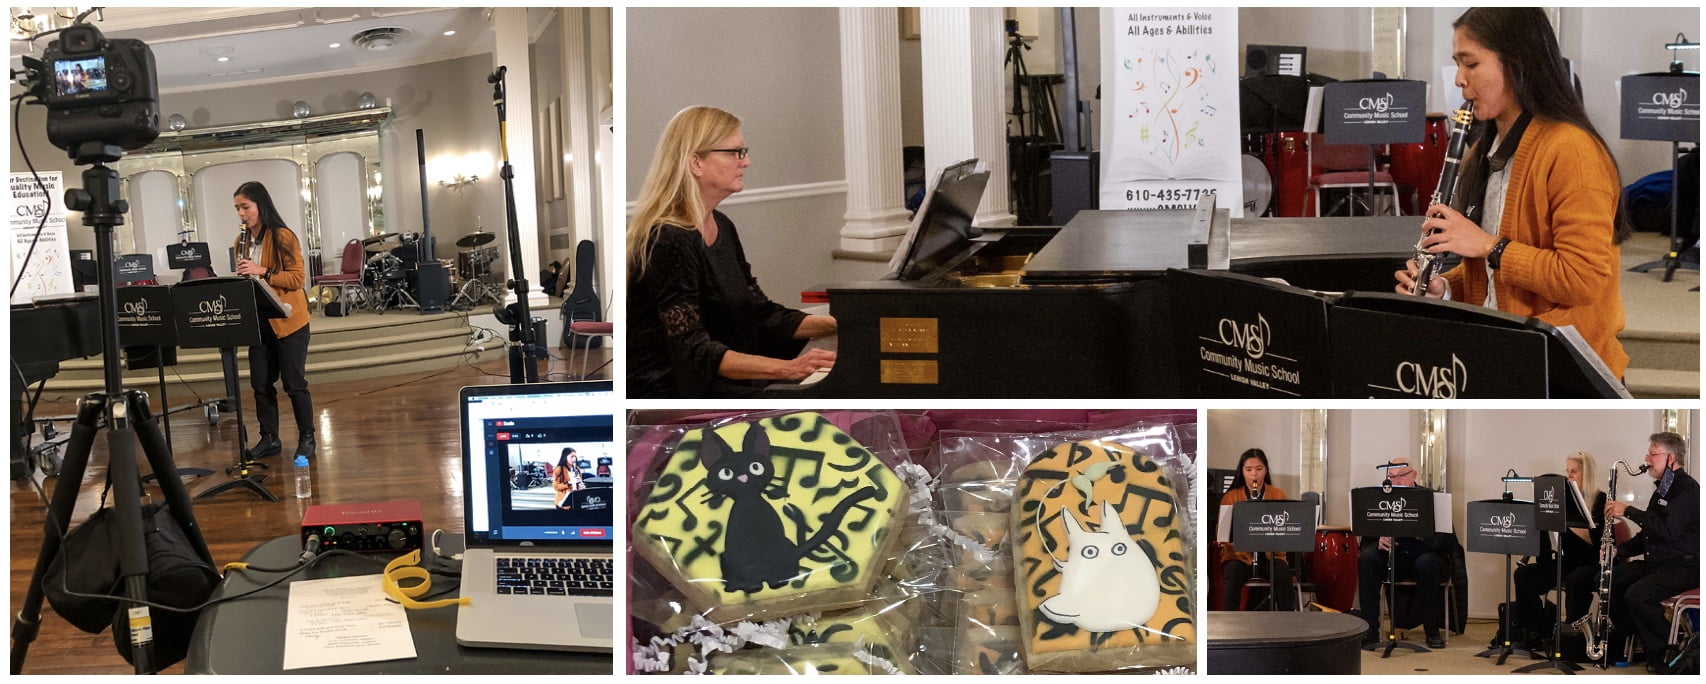 Mary Pulanco Clarinet Recital Recording at Community Music School Collage Photo